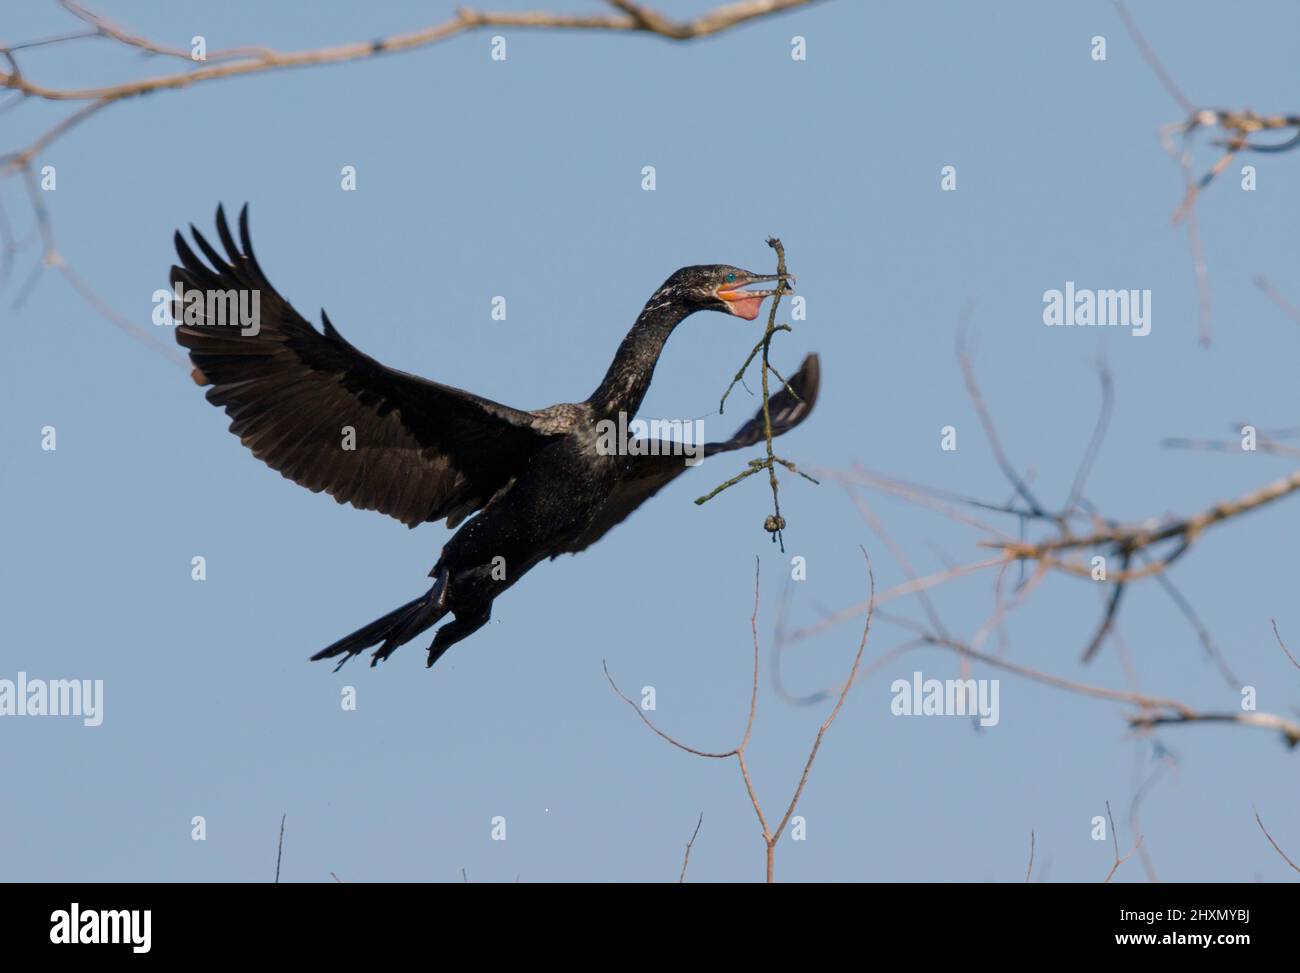 Neotropic cormorant (Nannopterum brasilianum) bringing a stick for nest, Alvin, Texas, USA. Stock Photo